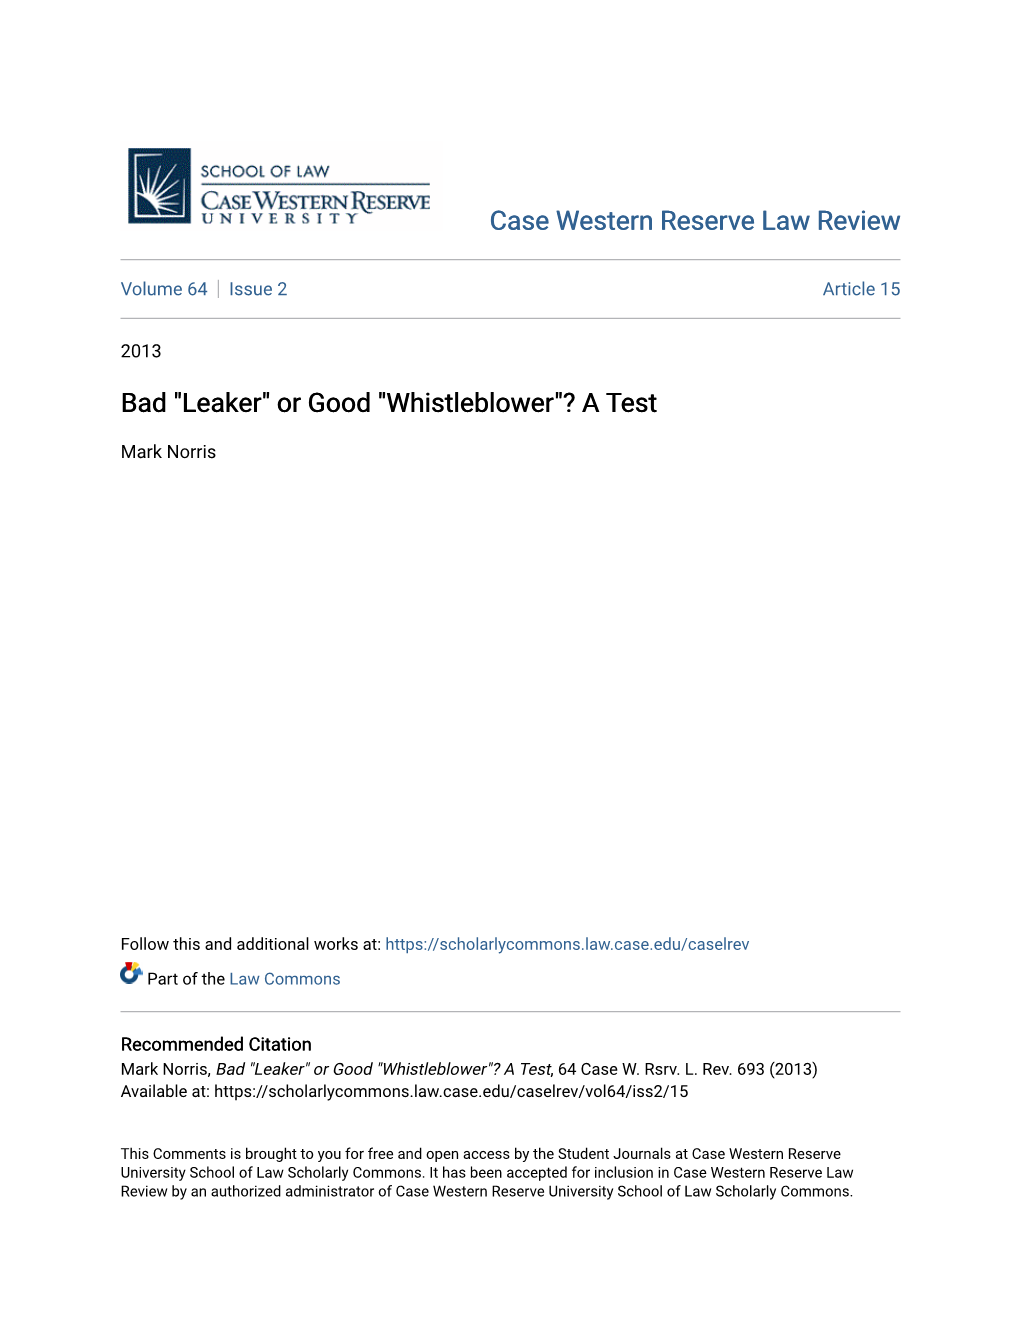 "Whistleblower"? a Test